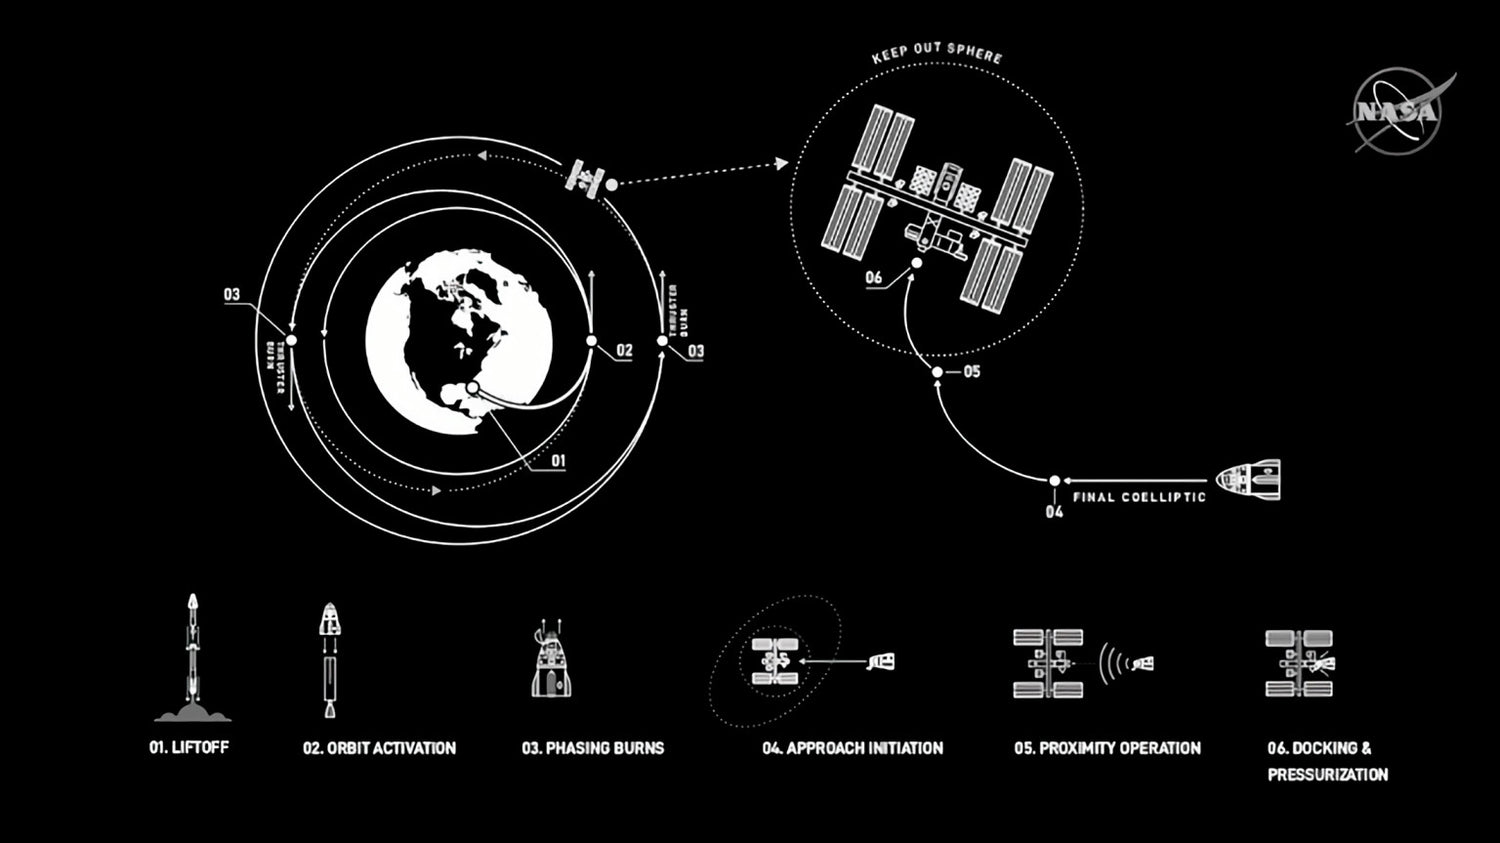 SpaceX Crew Dragon's flight plan for NASA Astronauts’ debut voyage